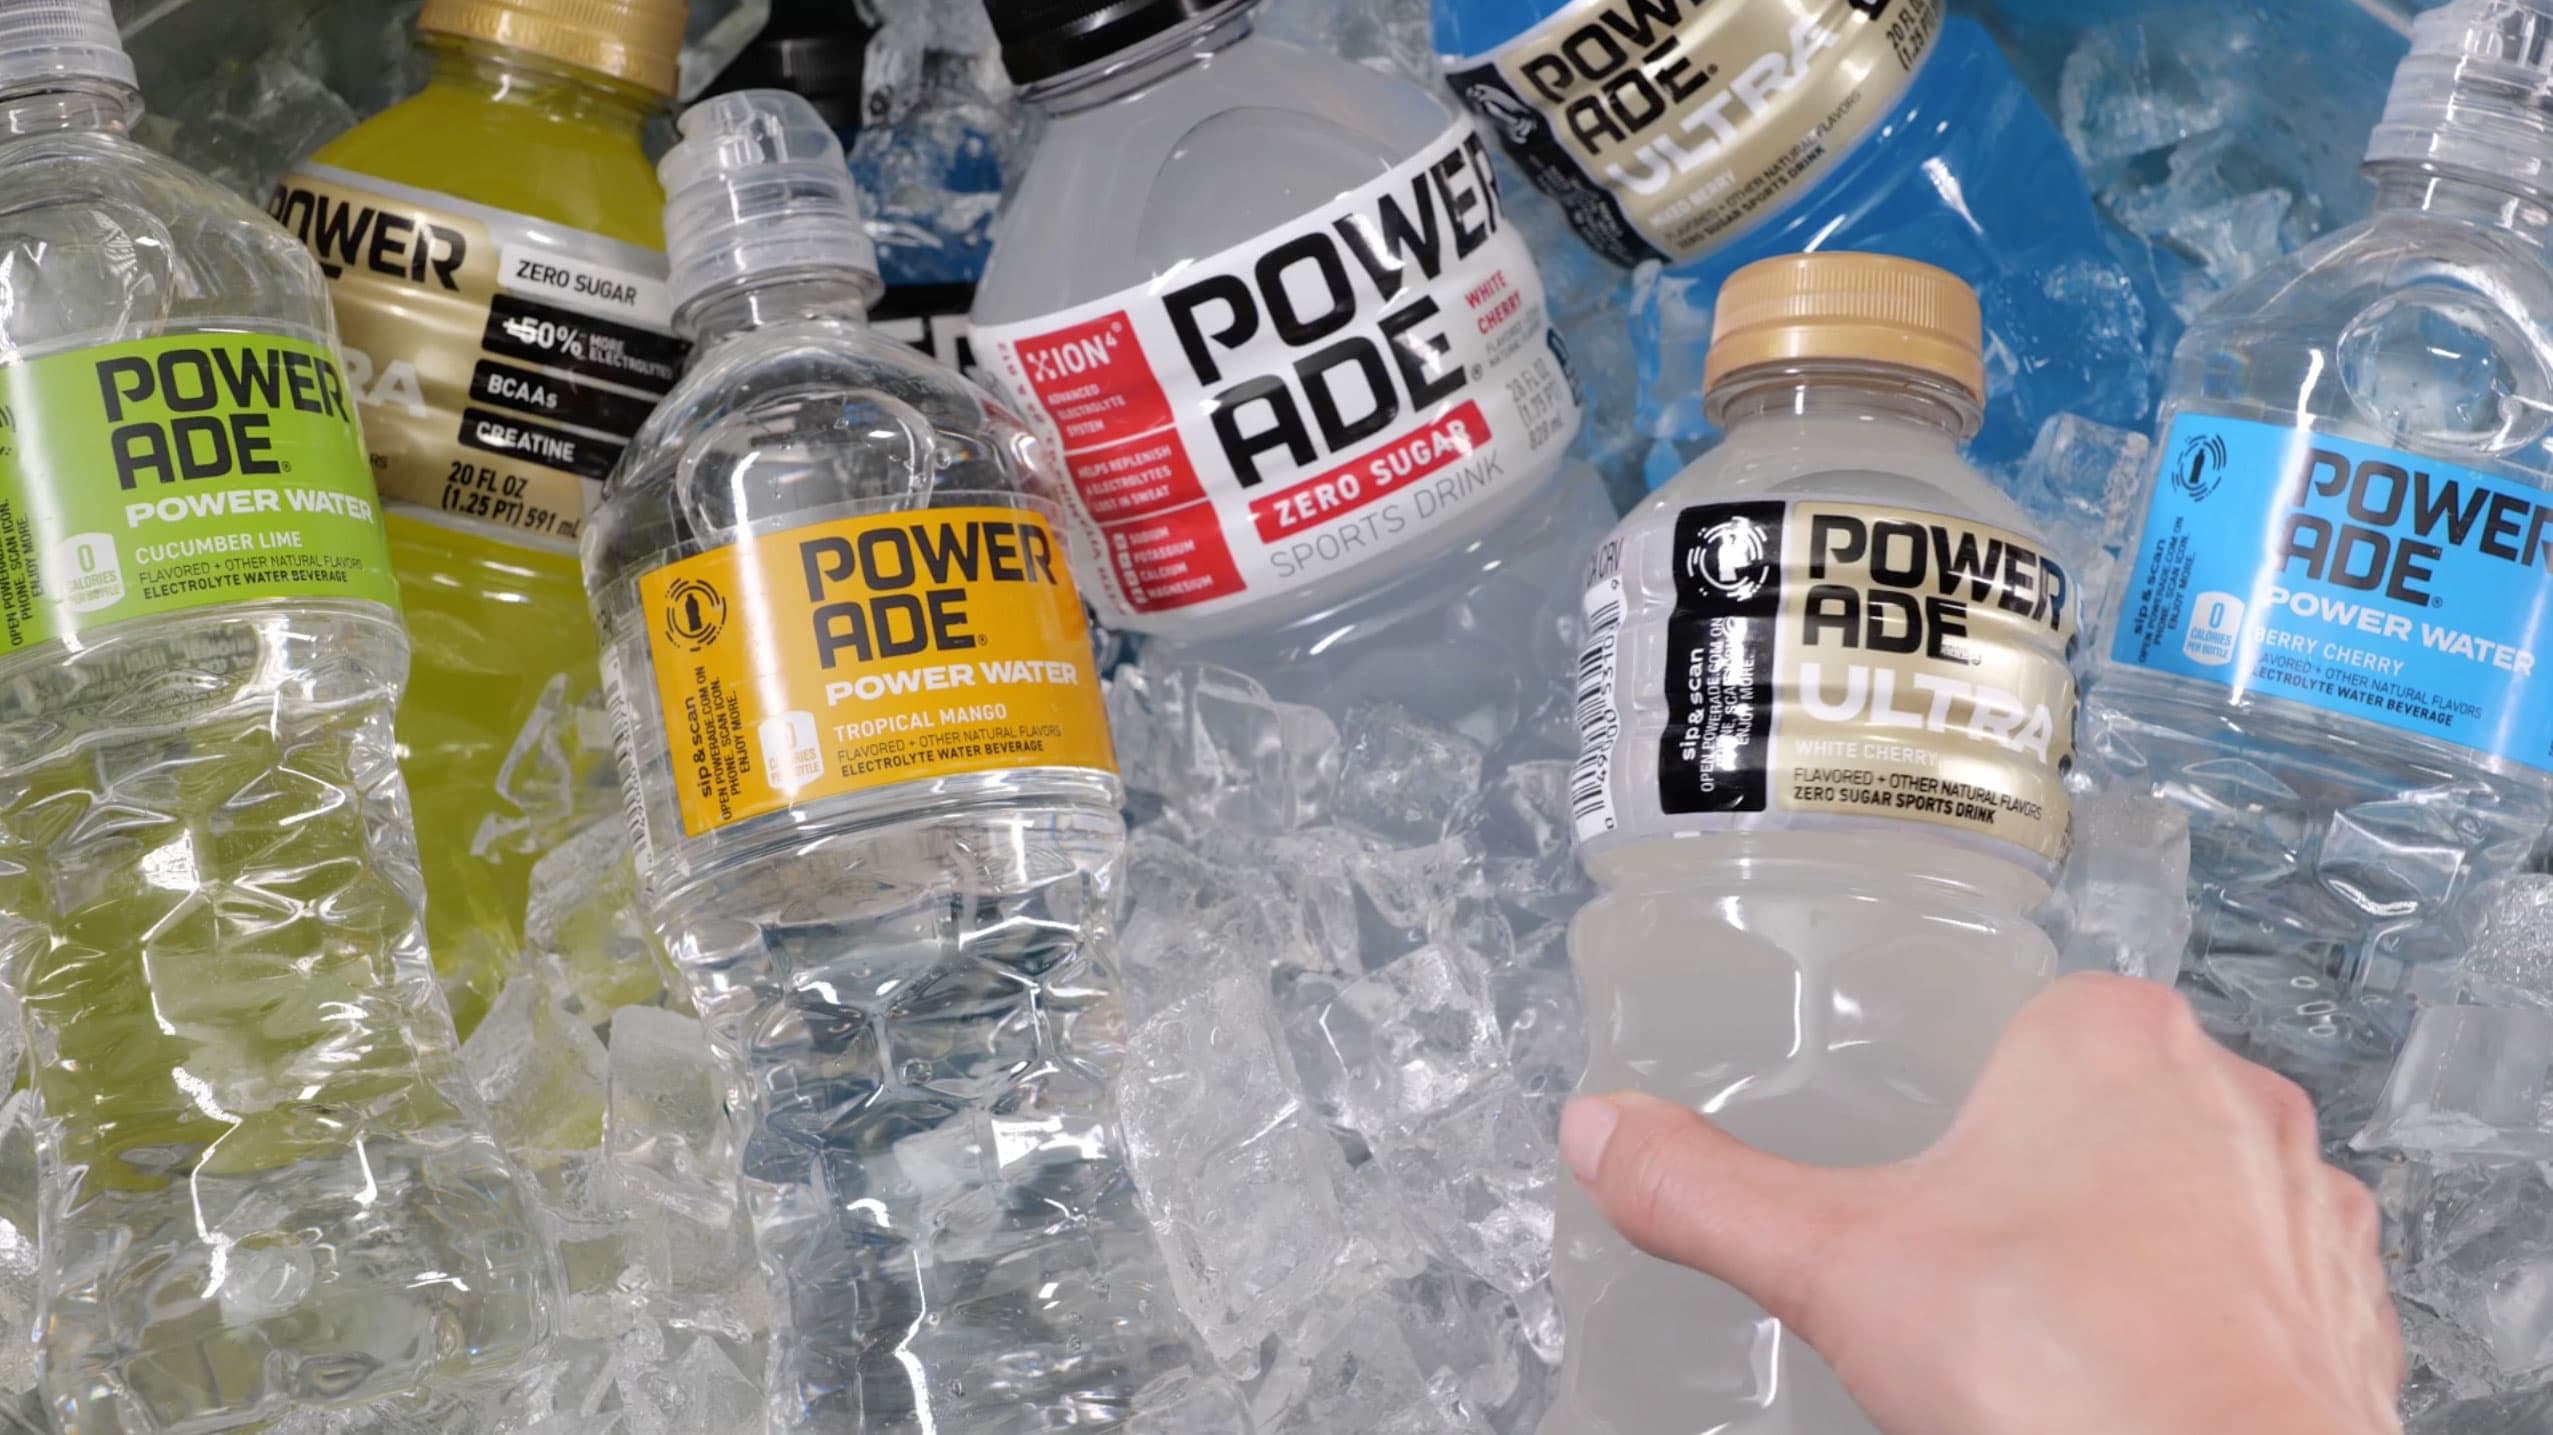 Gatorade and Powerade try to adapt as sports drinks sales